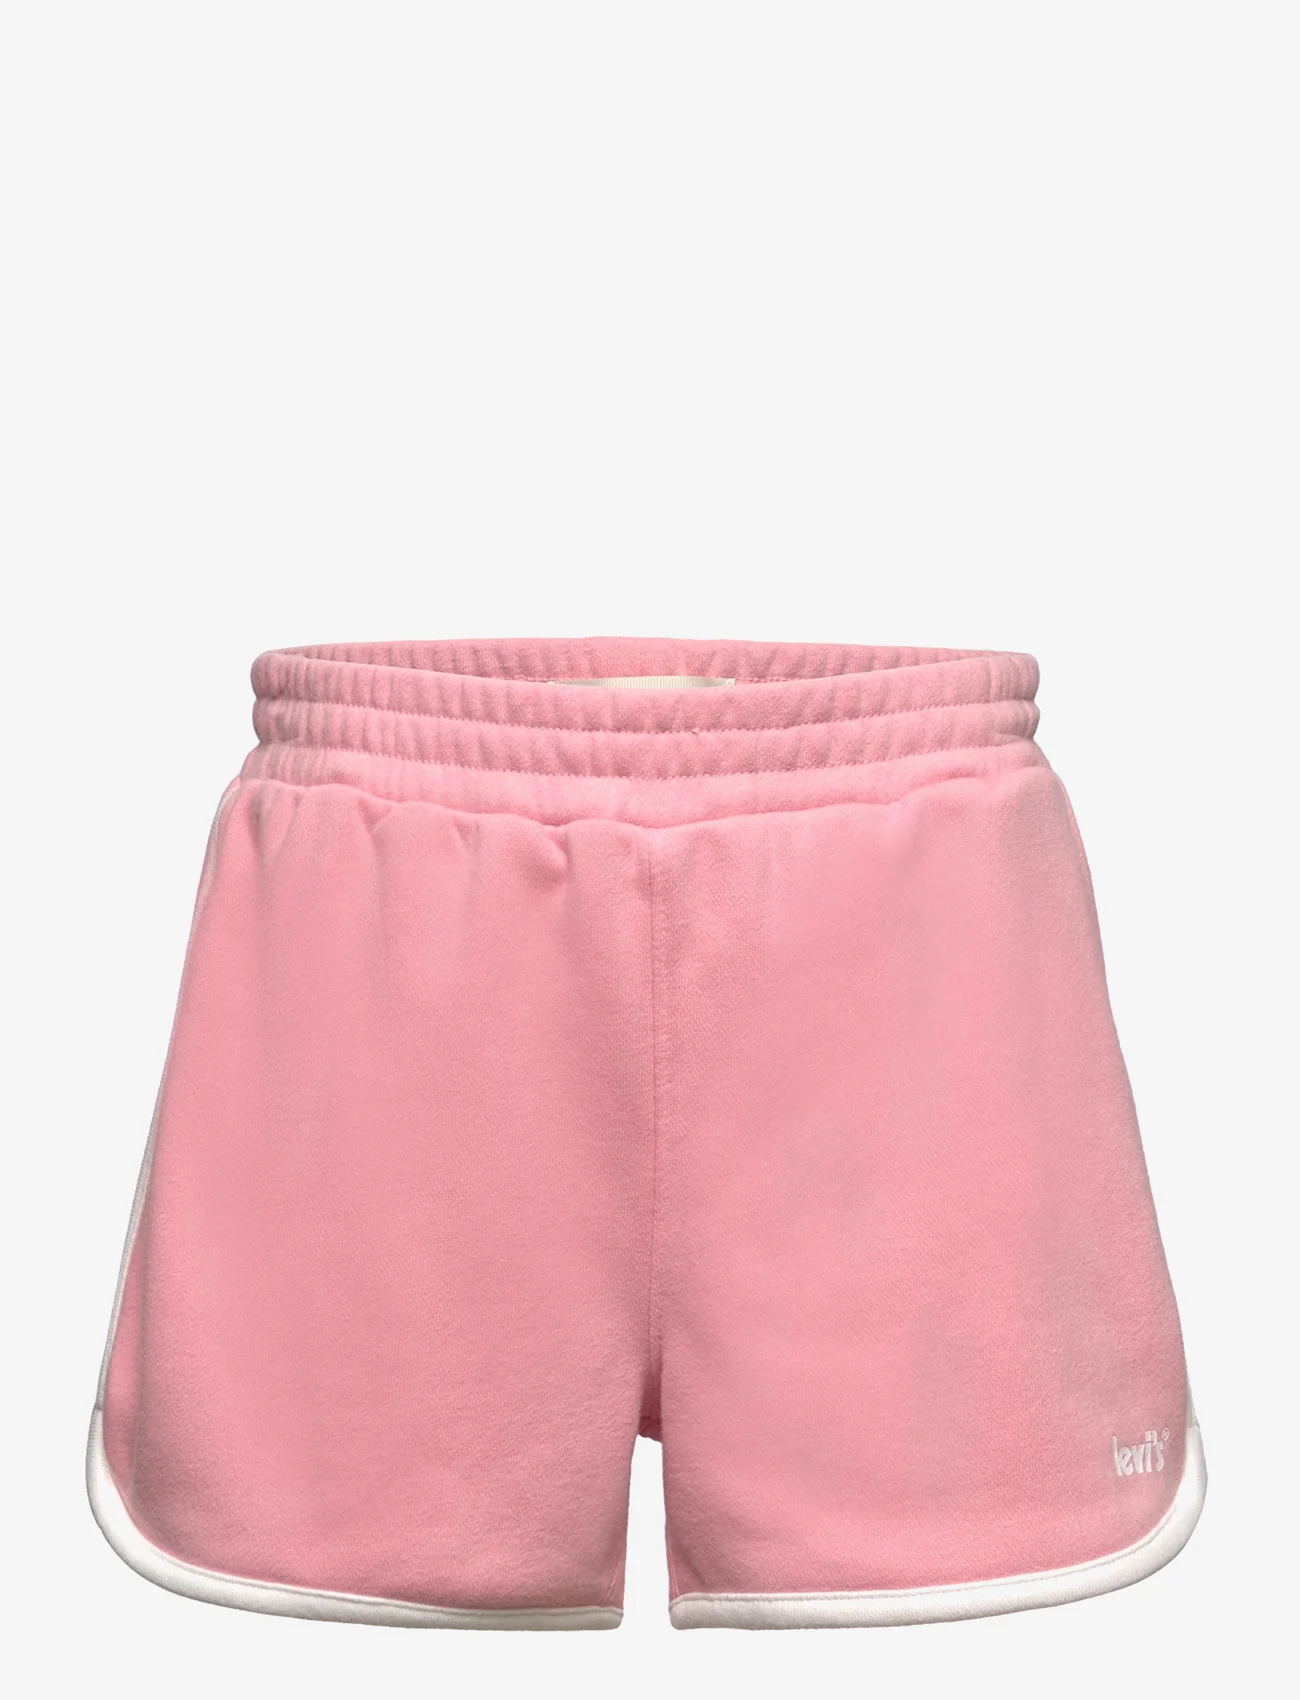 Levi's - Levi's Dolphin Shorts - collegeshortsit - pink - 0